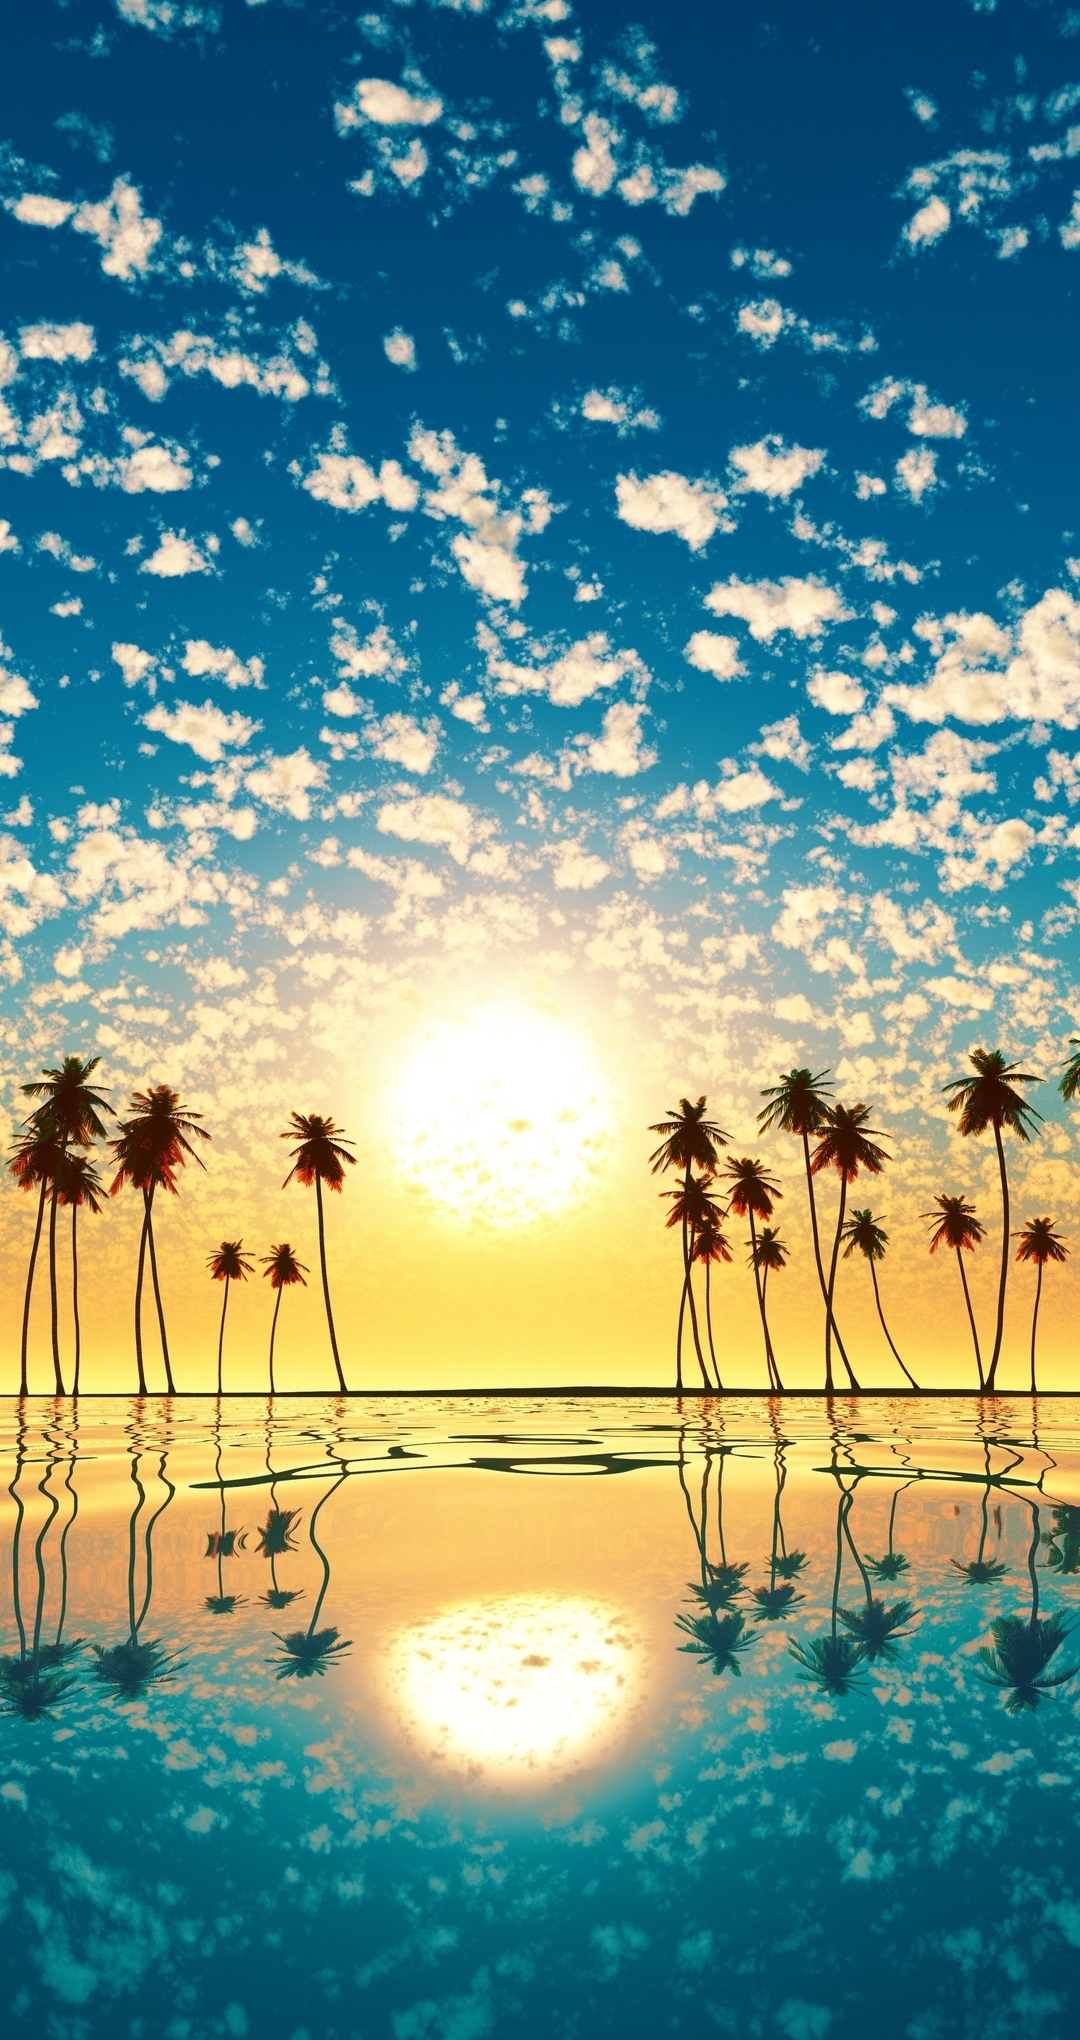 Image: Landscape, sunset, sun, sky, clouds, island, ocean, palm trees, water, reflection, horizon